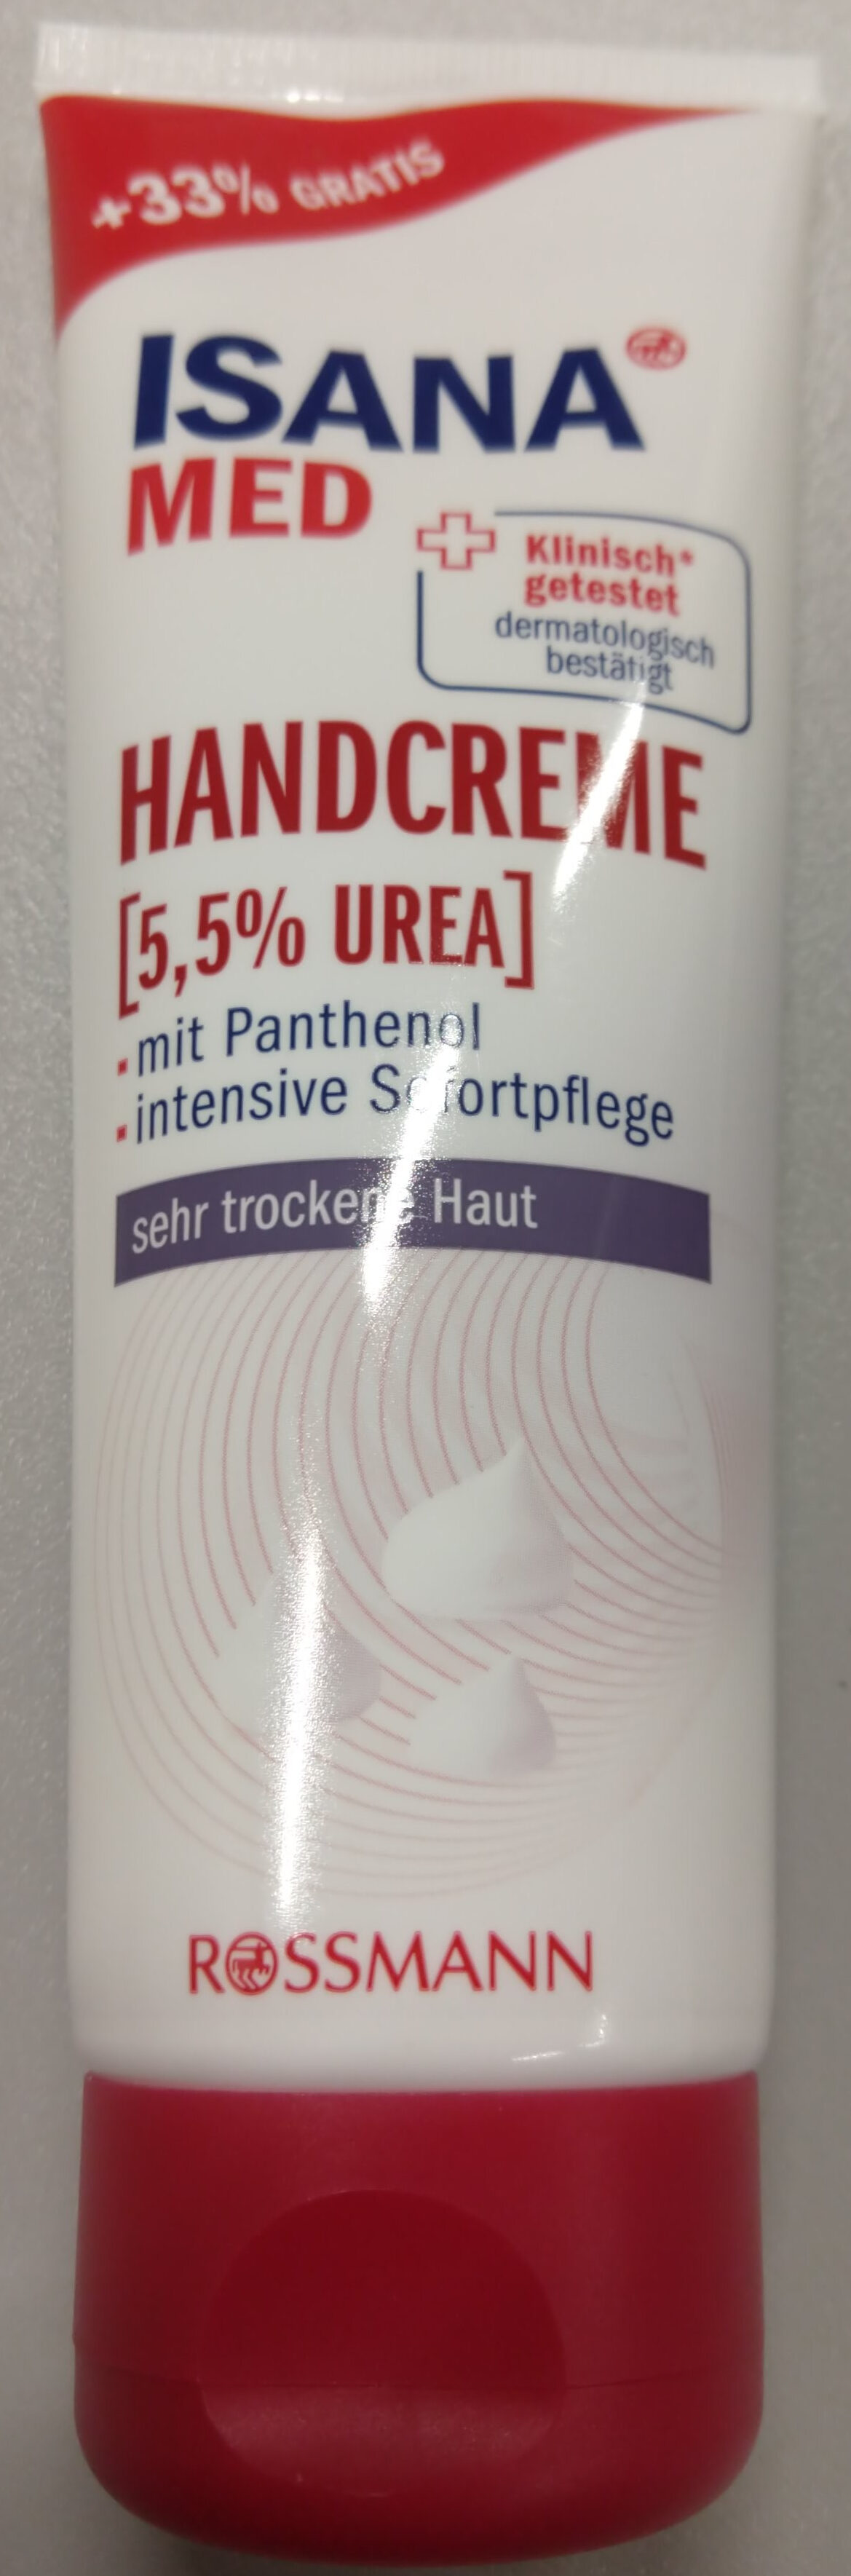 Isana Med Handcreme 5,5% Urea - Produto - de